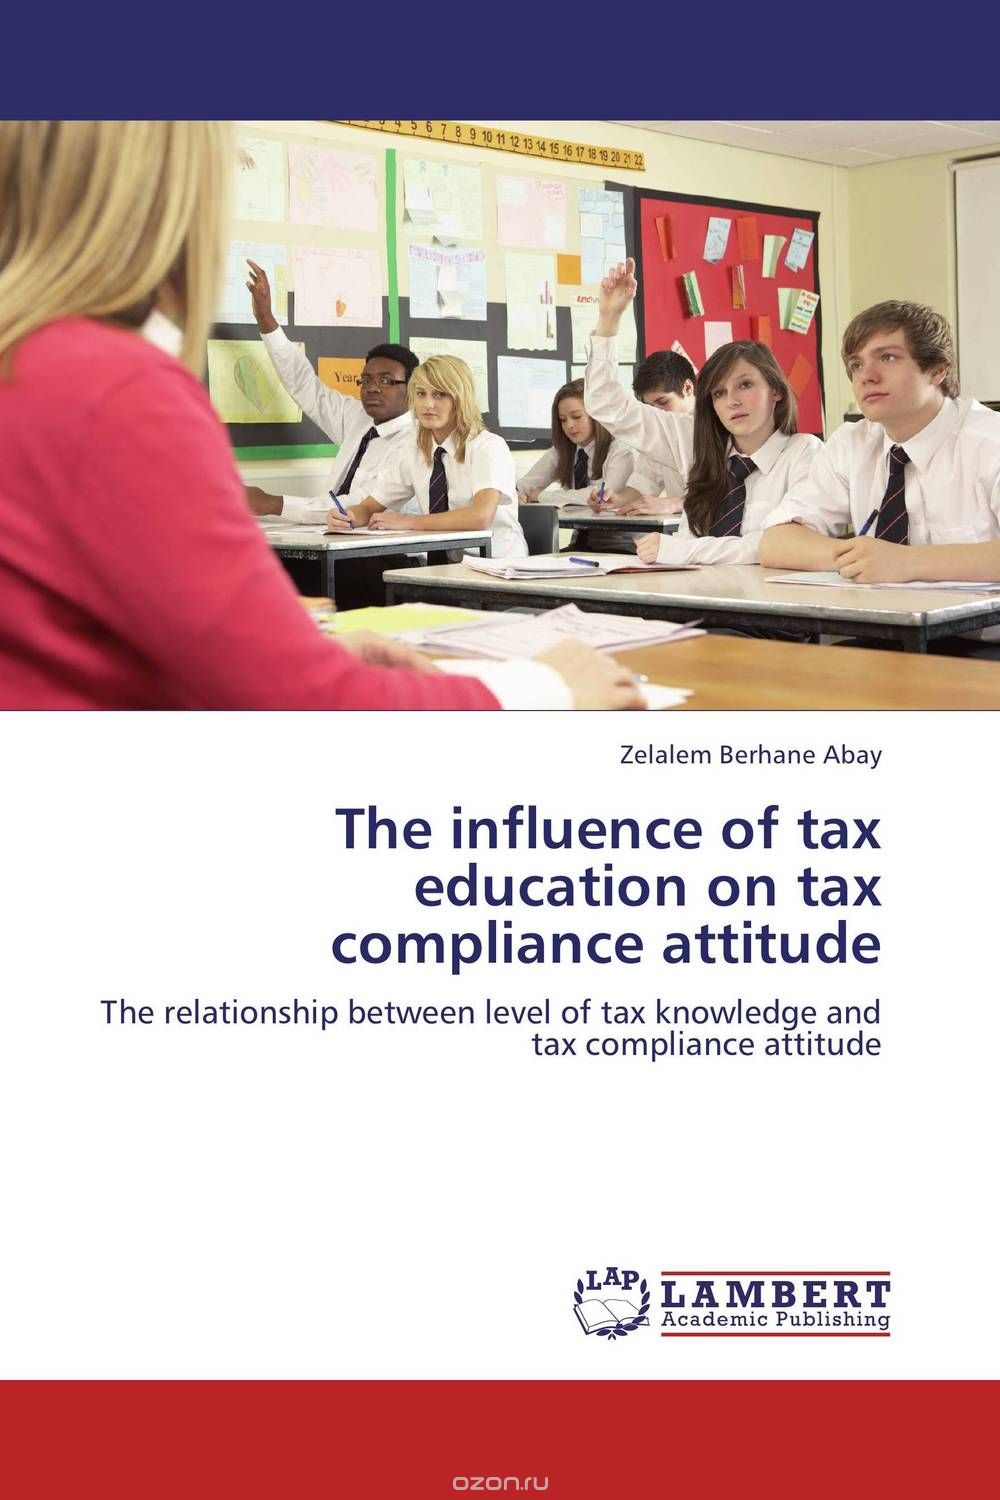 Скачать книгу "The influence of tax education on tax compliance attitude"